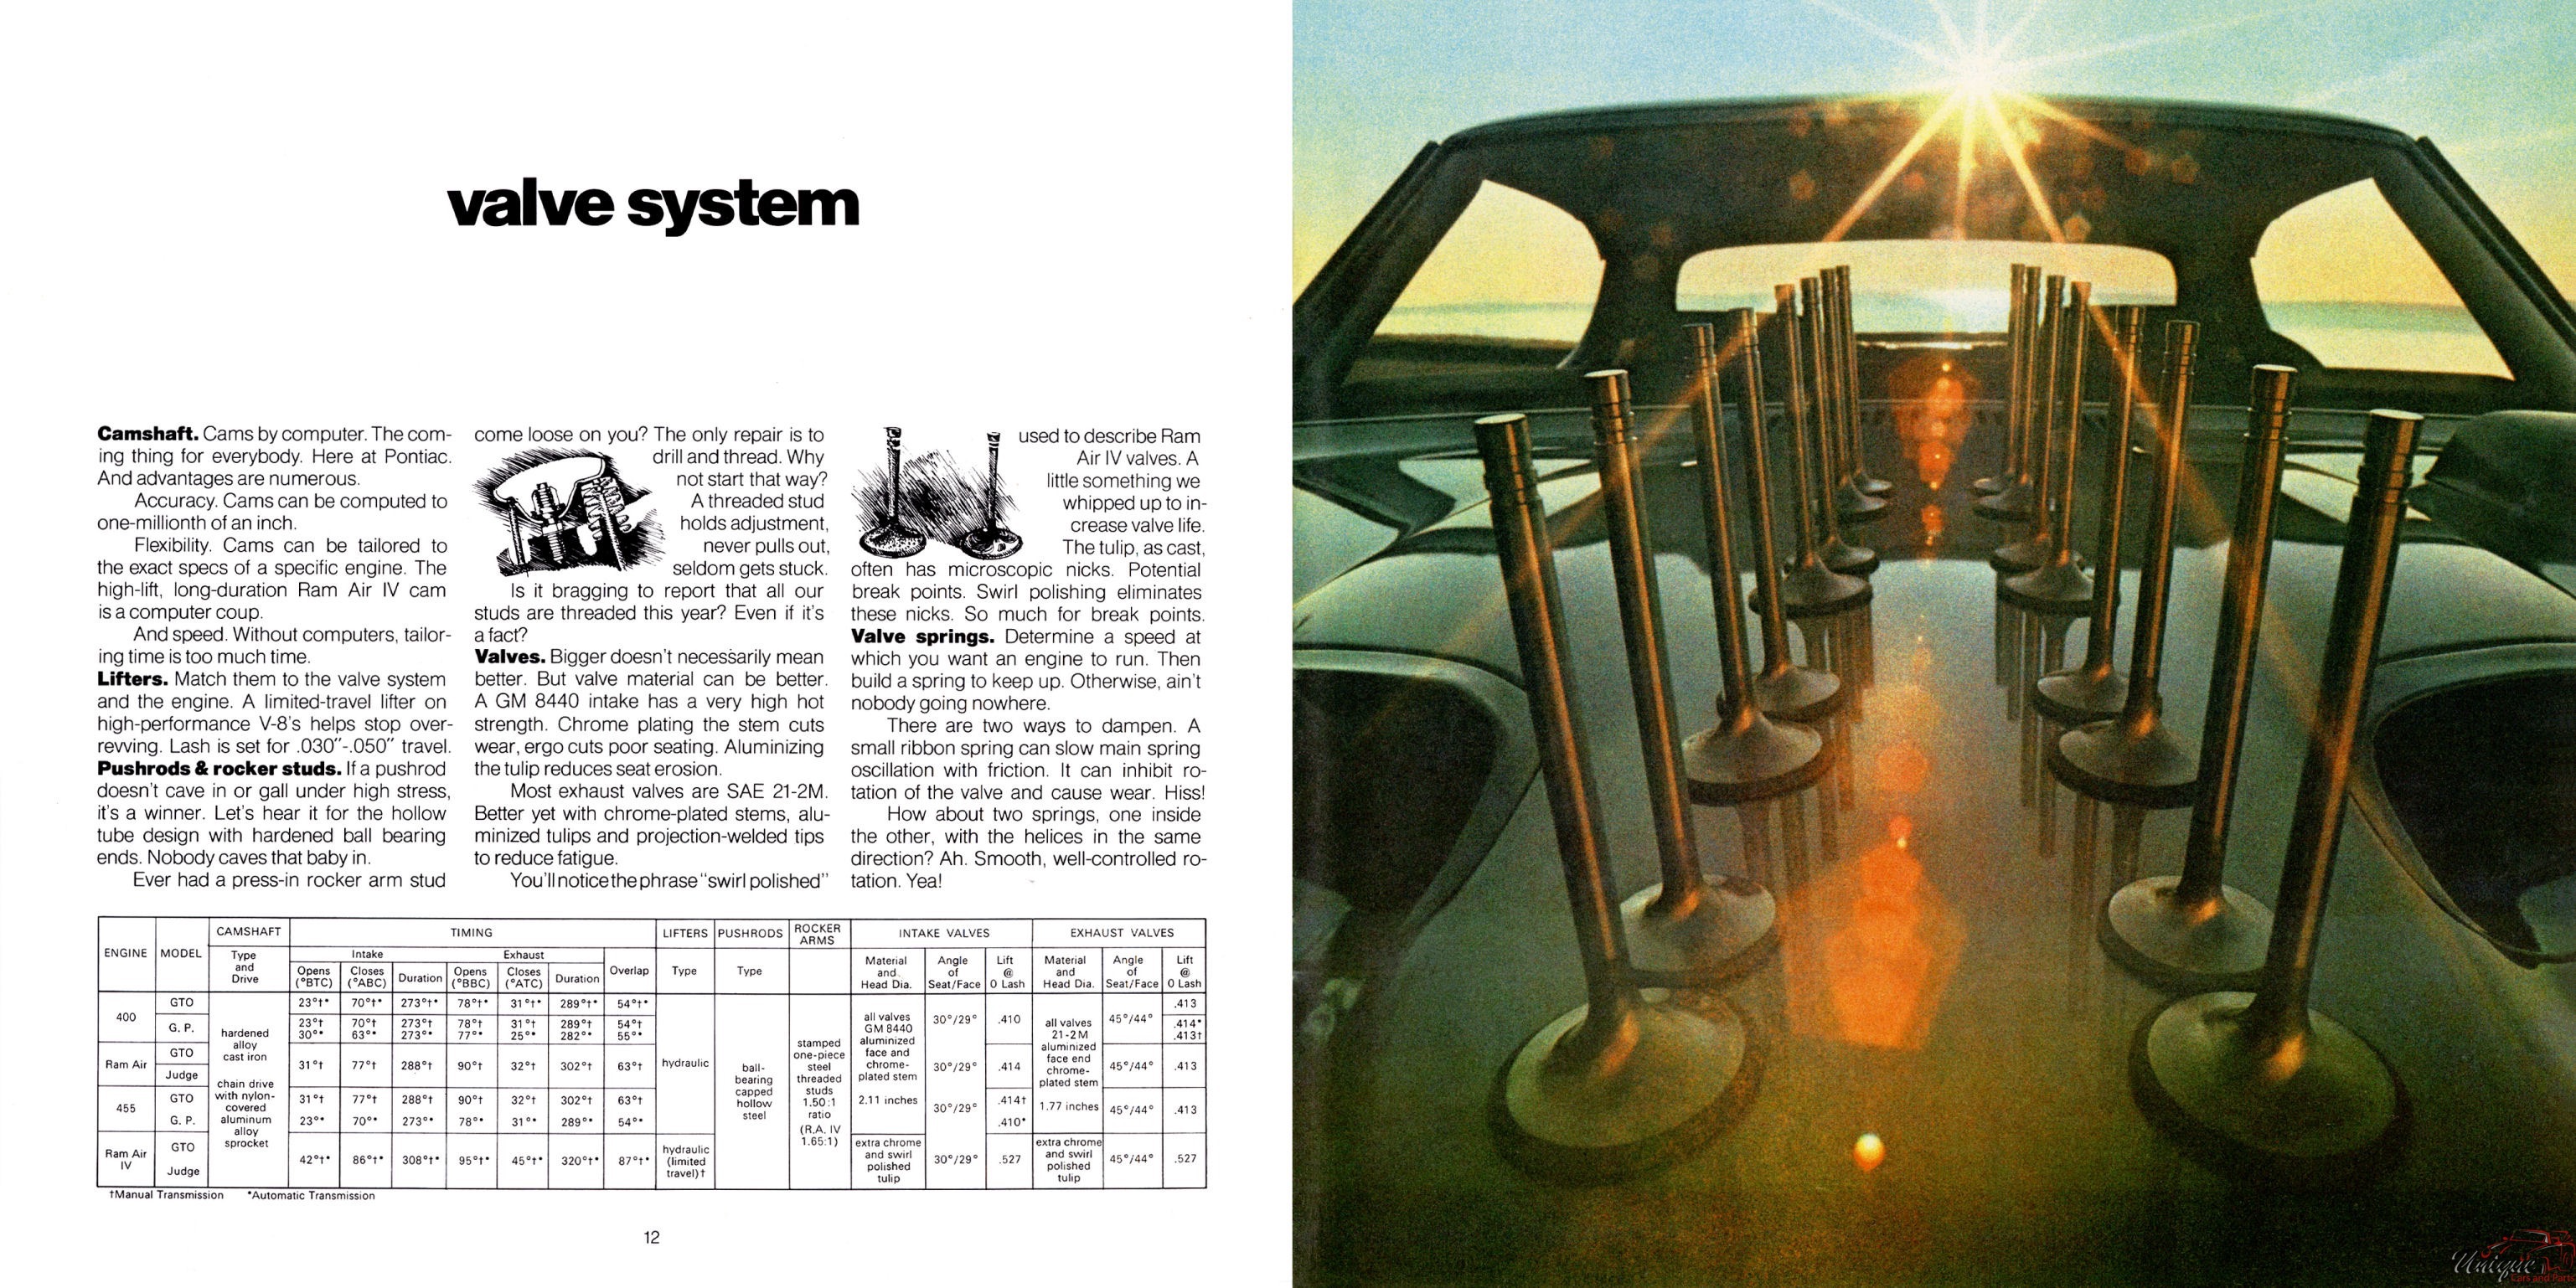 1970 Pontiac Performance Brochure Page 10